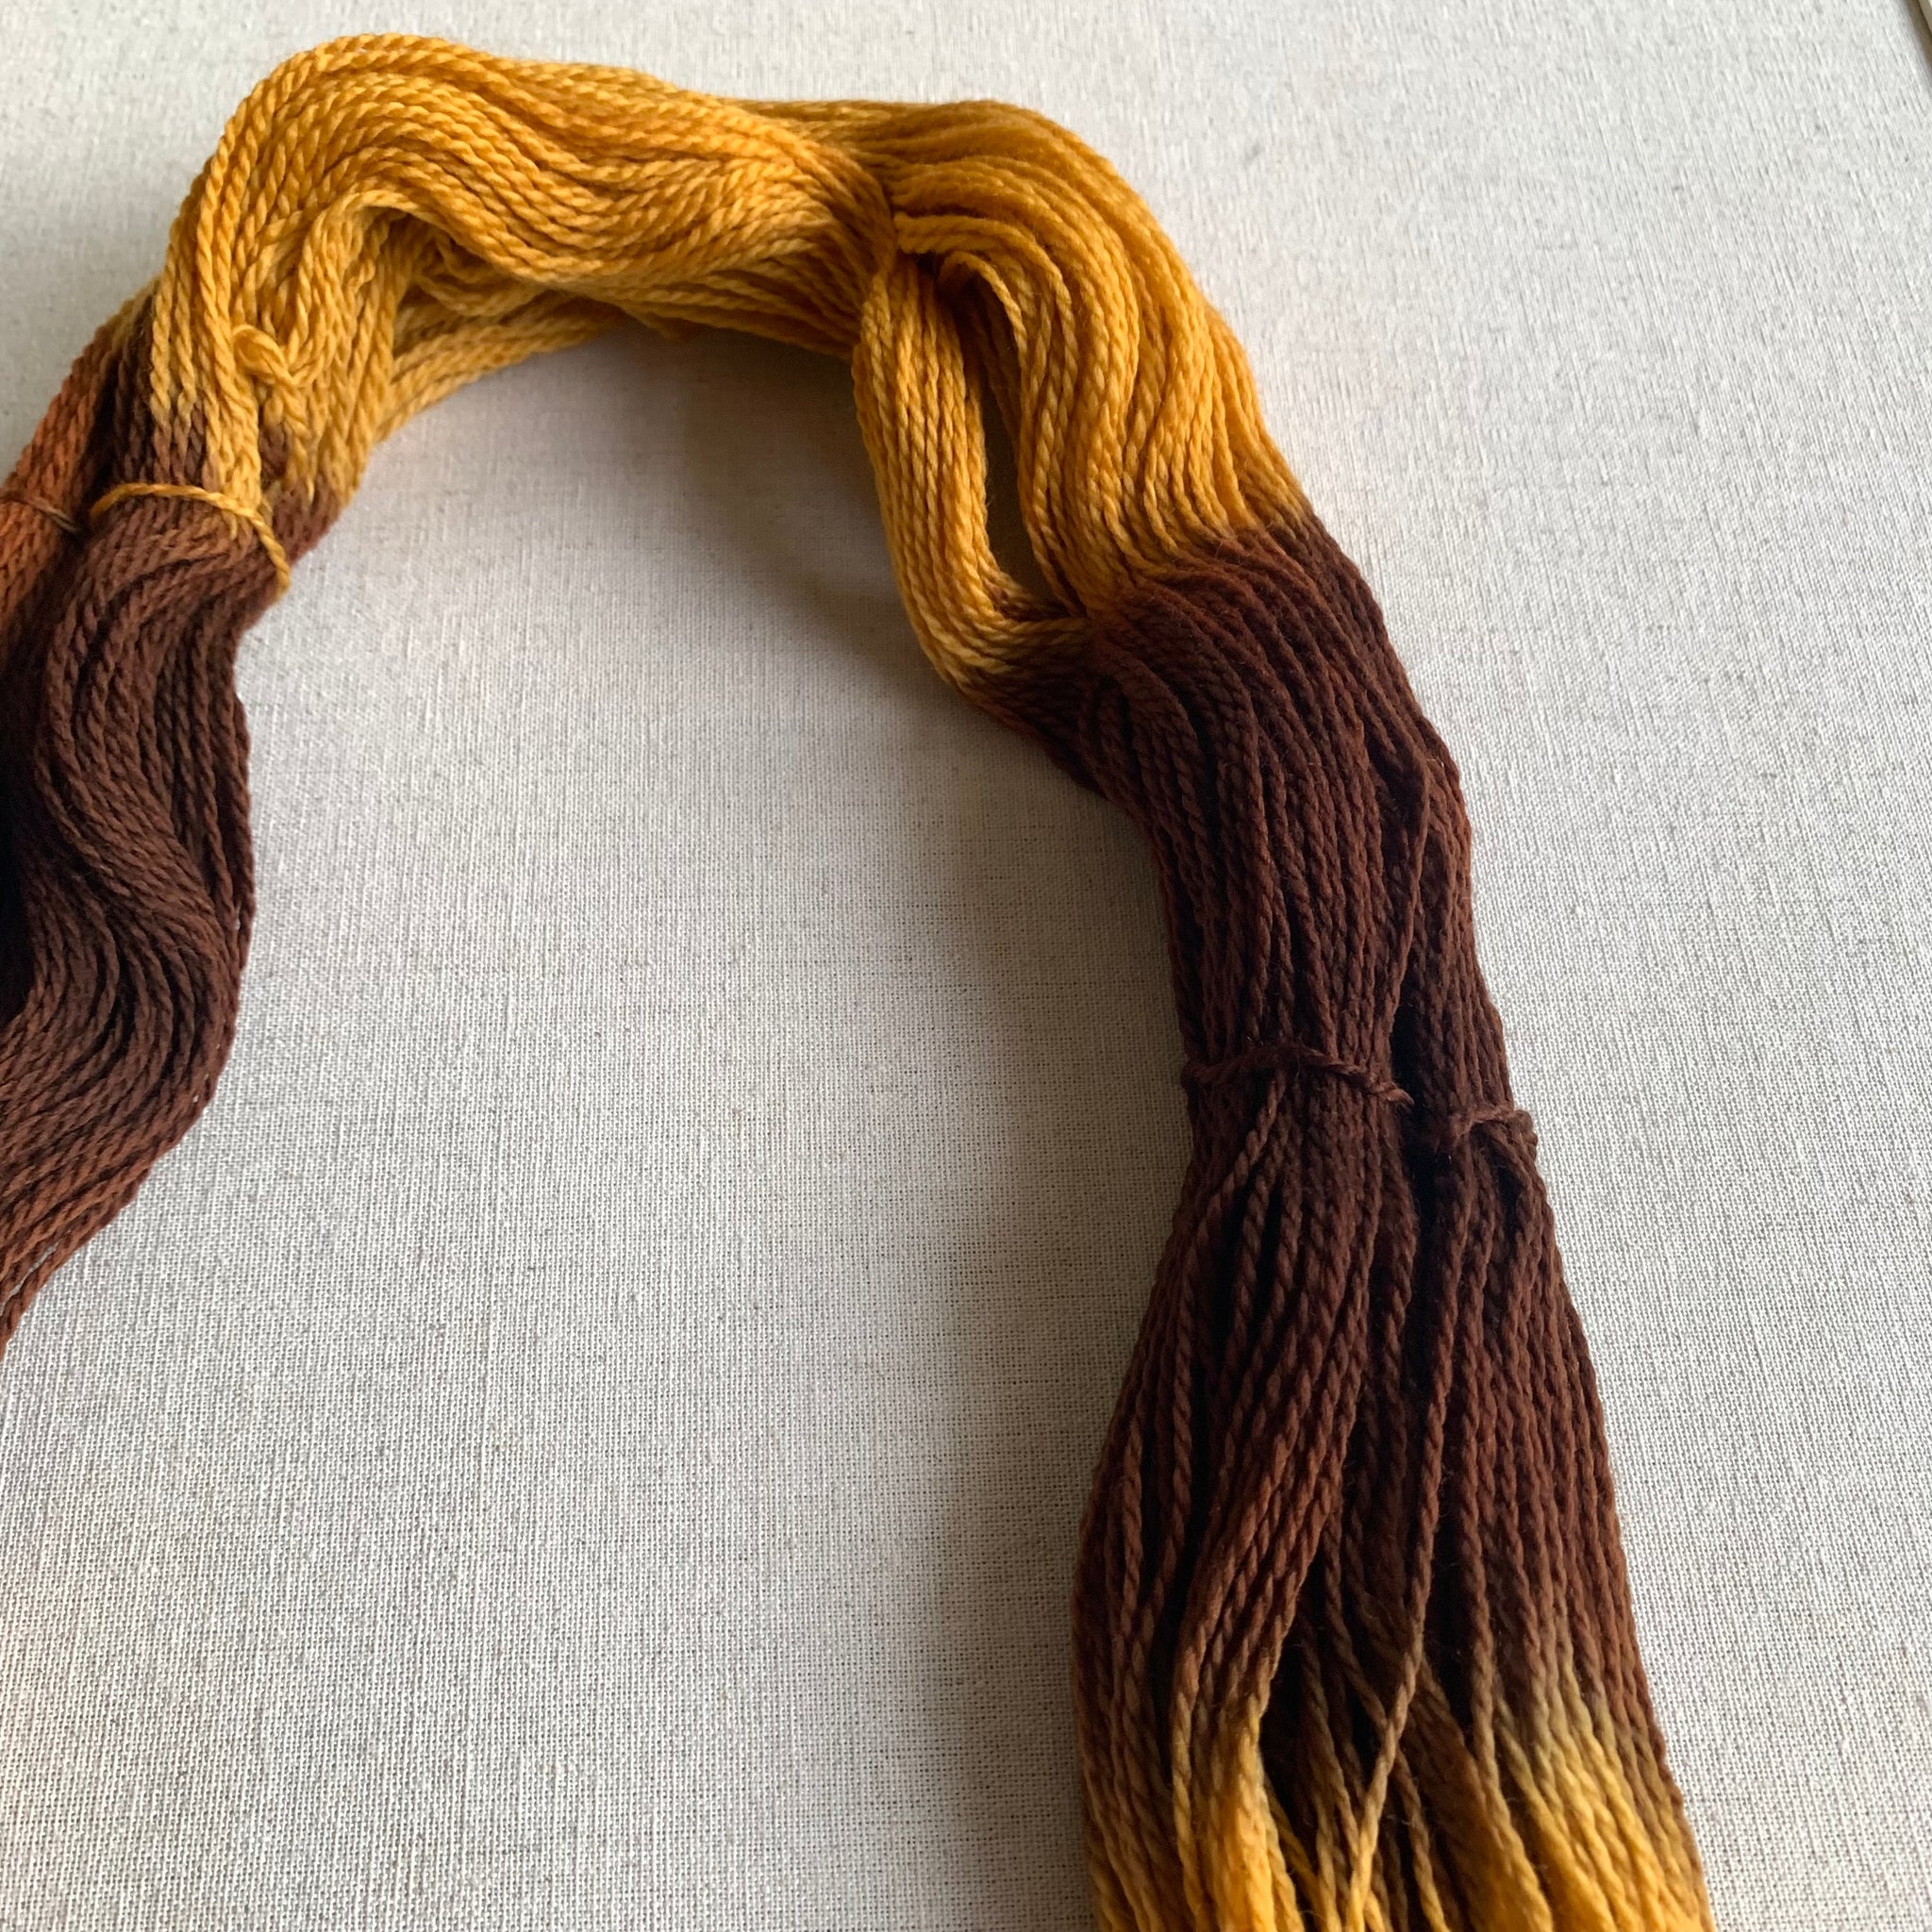 The Twist Hand Dyed Superwash 100% Merino Wool DK Yarn – Yarntuary